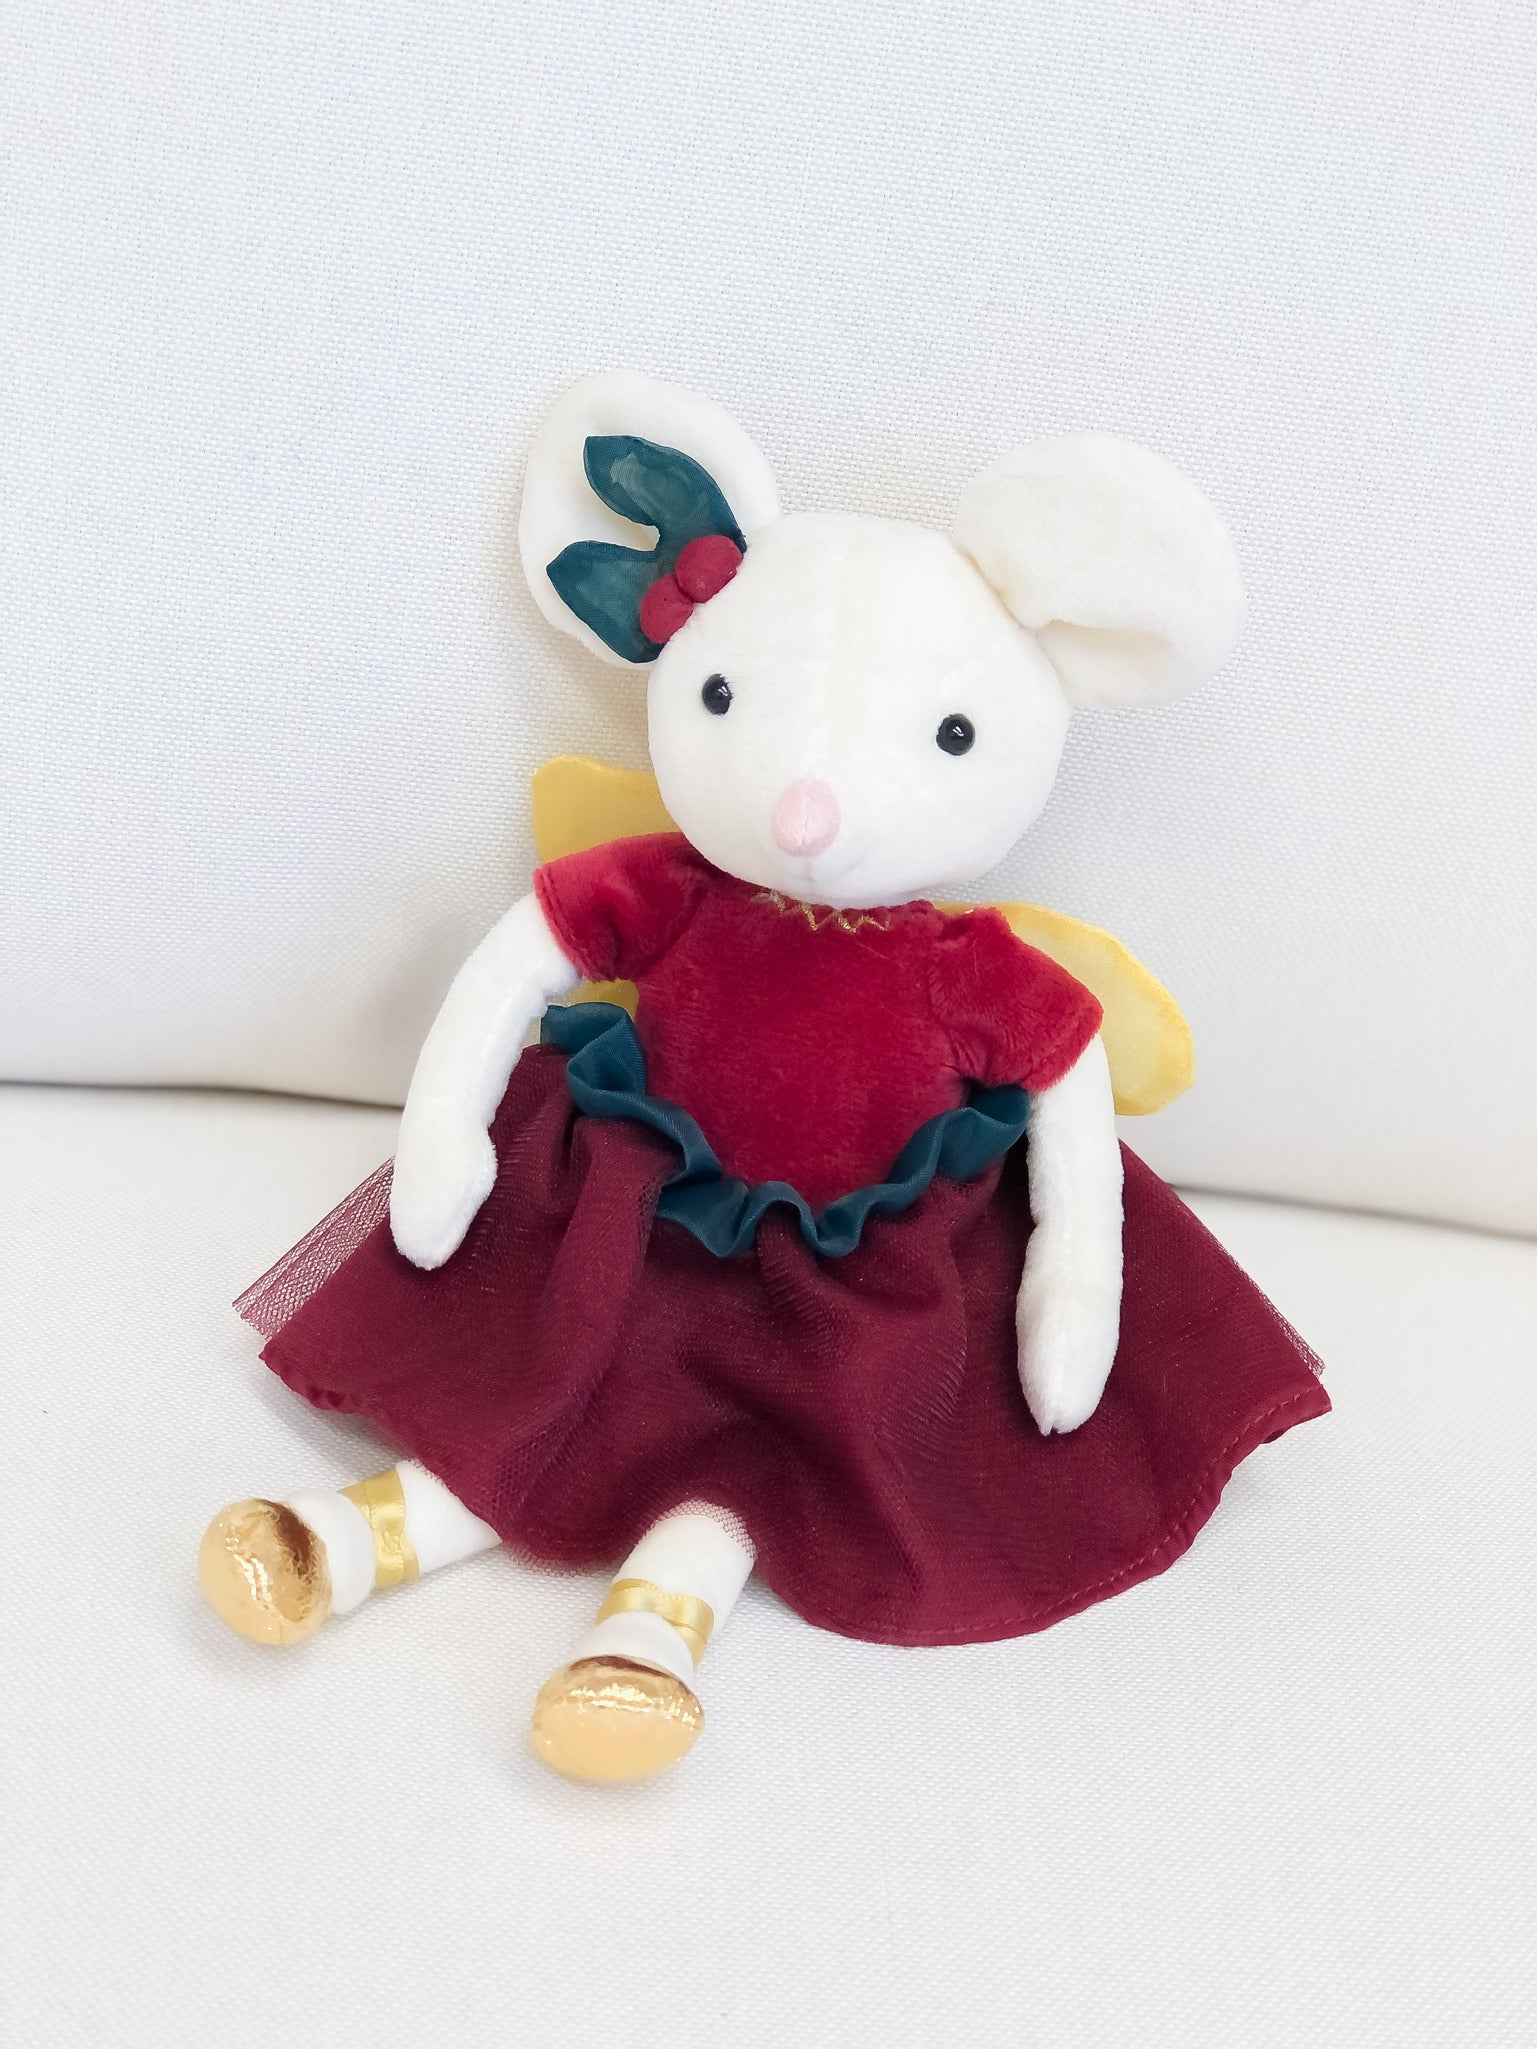 Sugar Plum Fairy Mouse Stuffed Animal by Jellycat